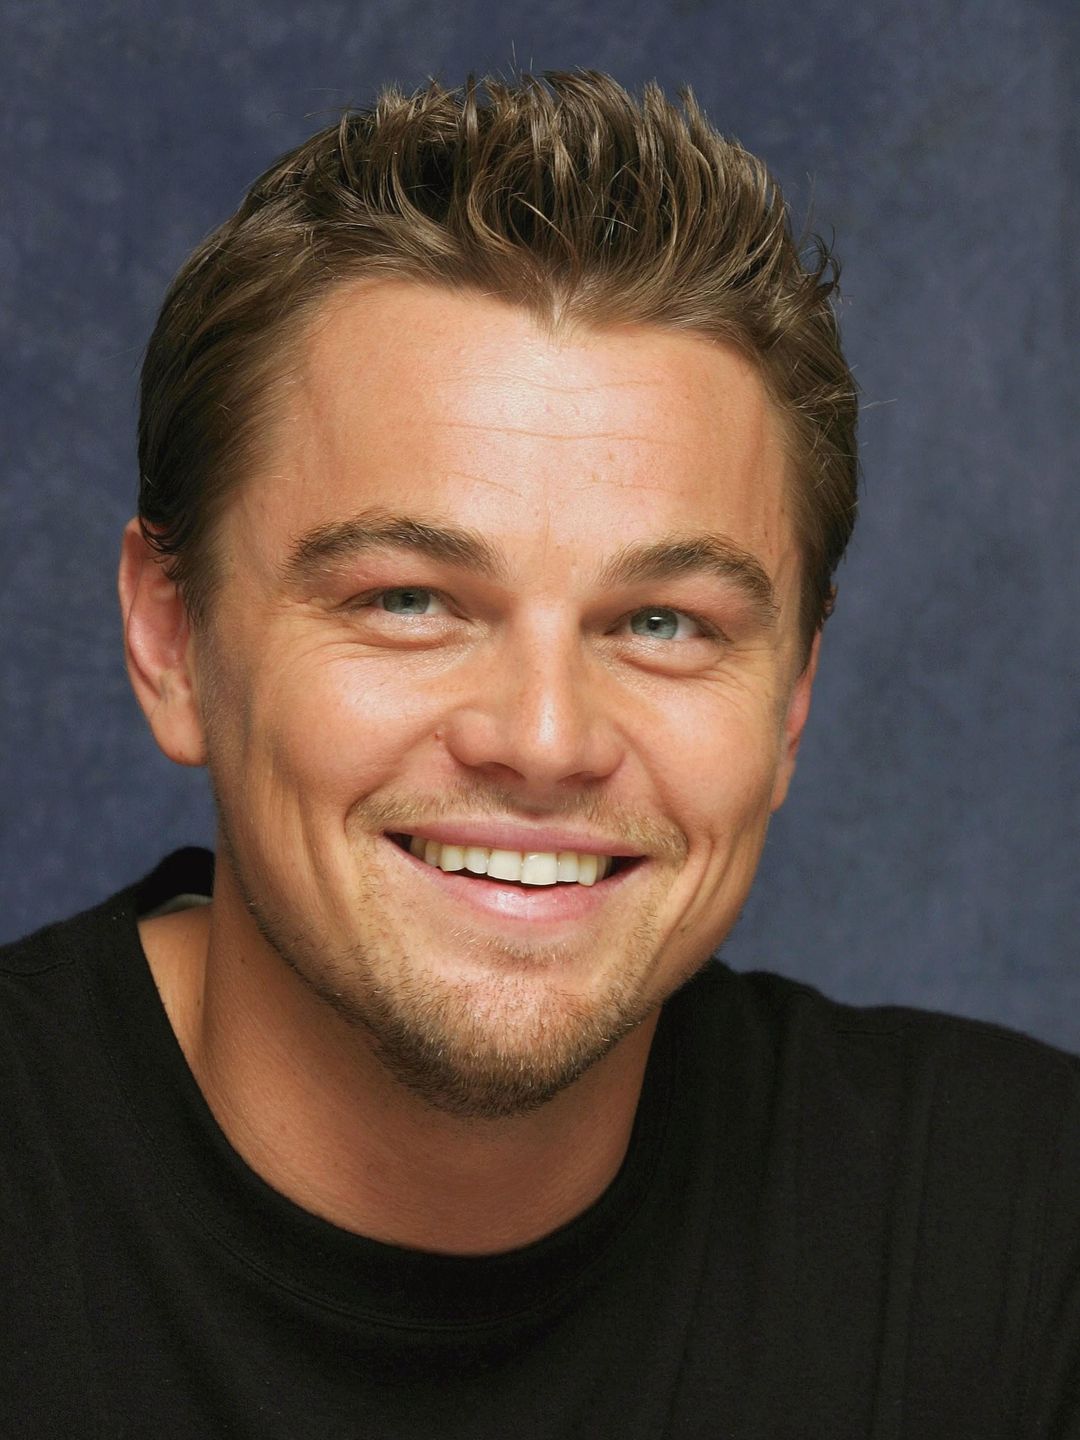 Leonardo DiCaprio education